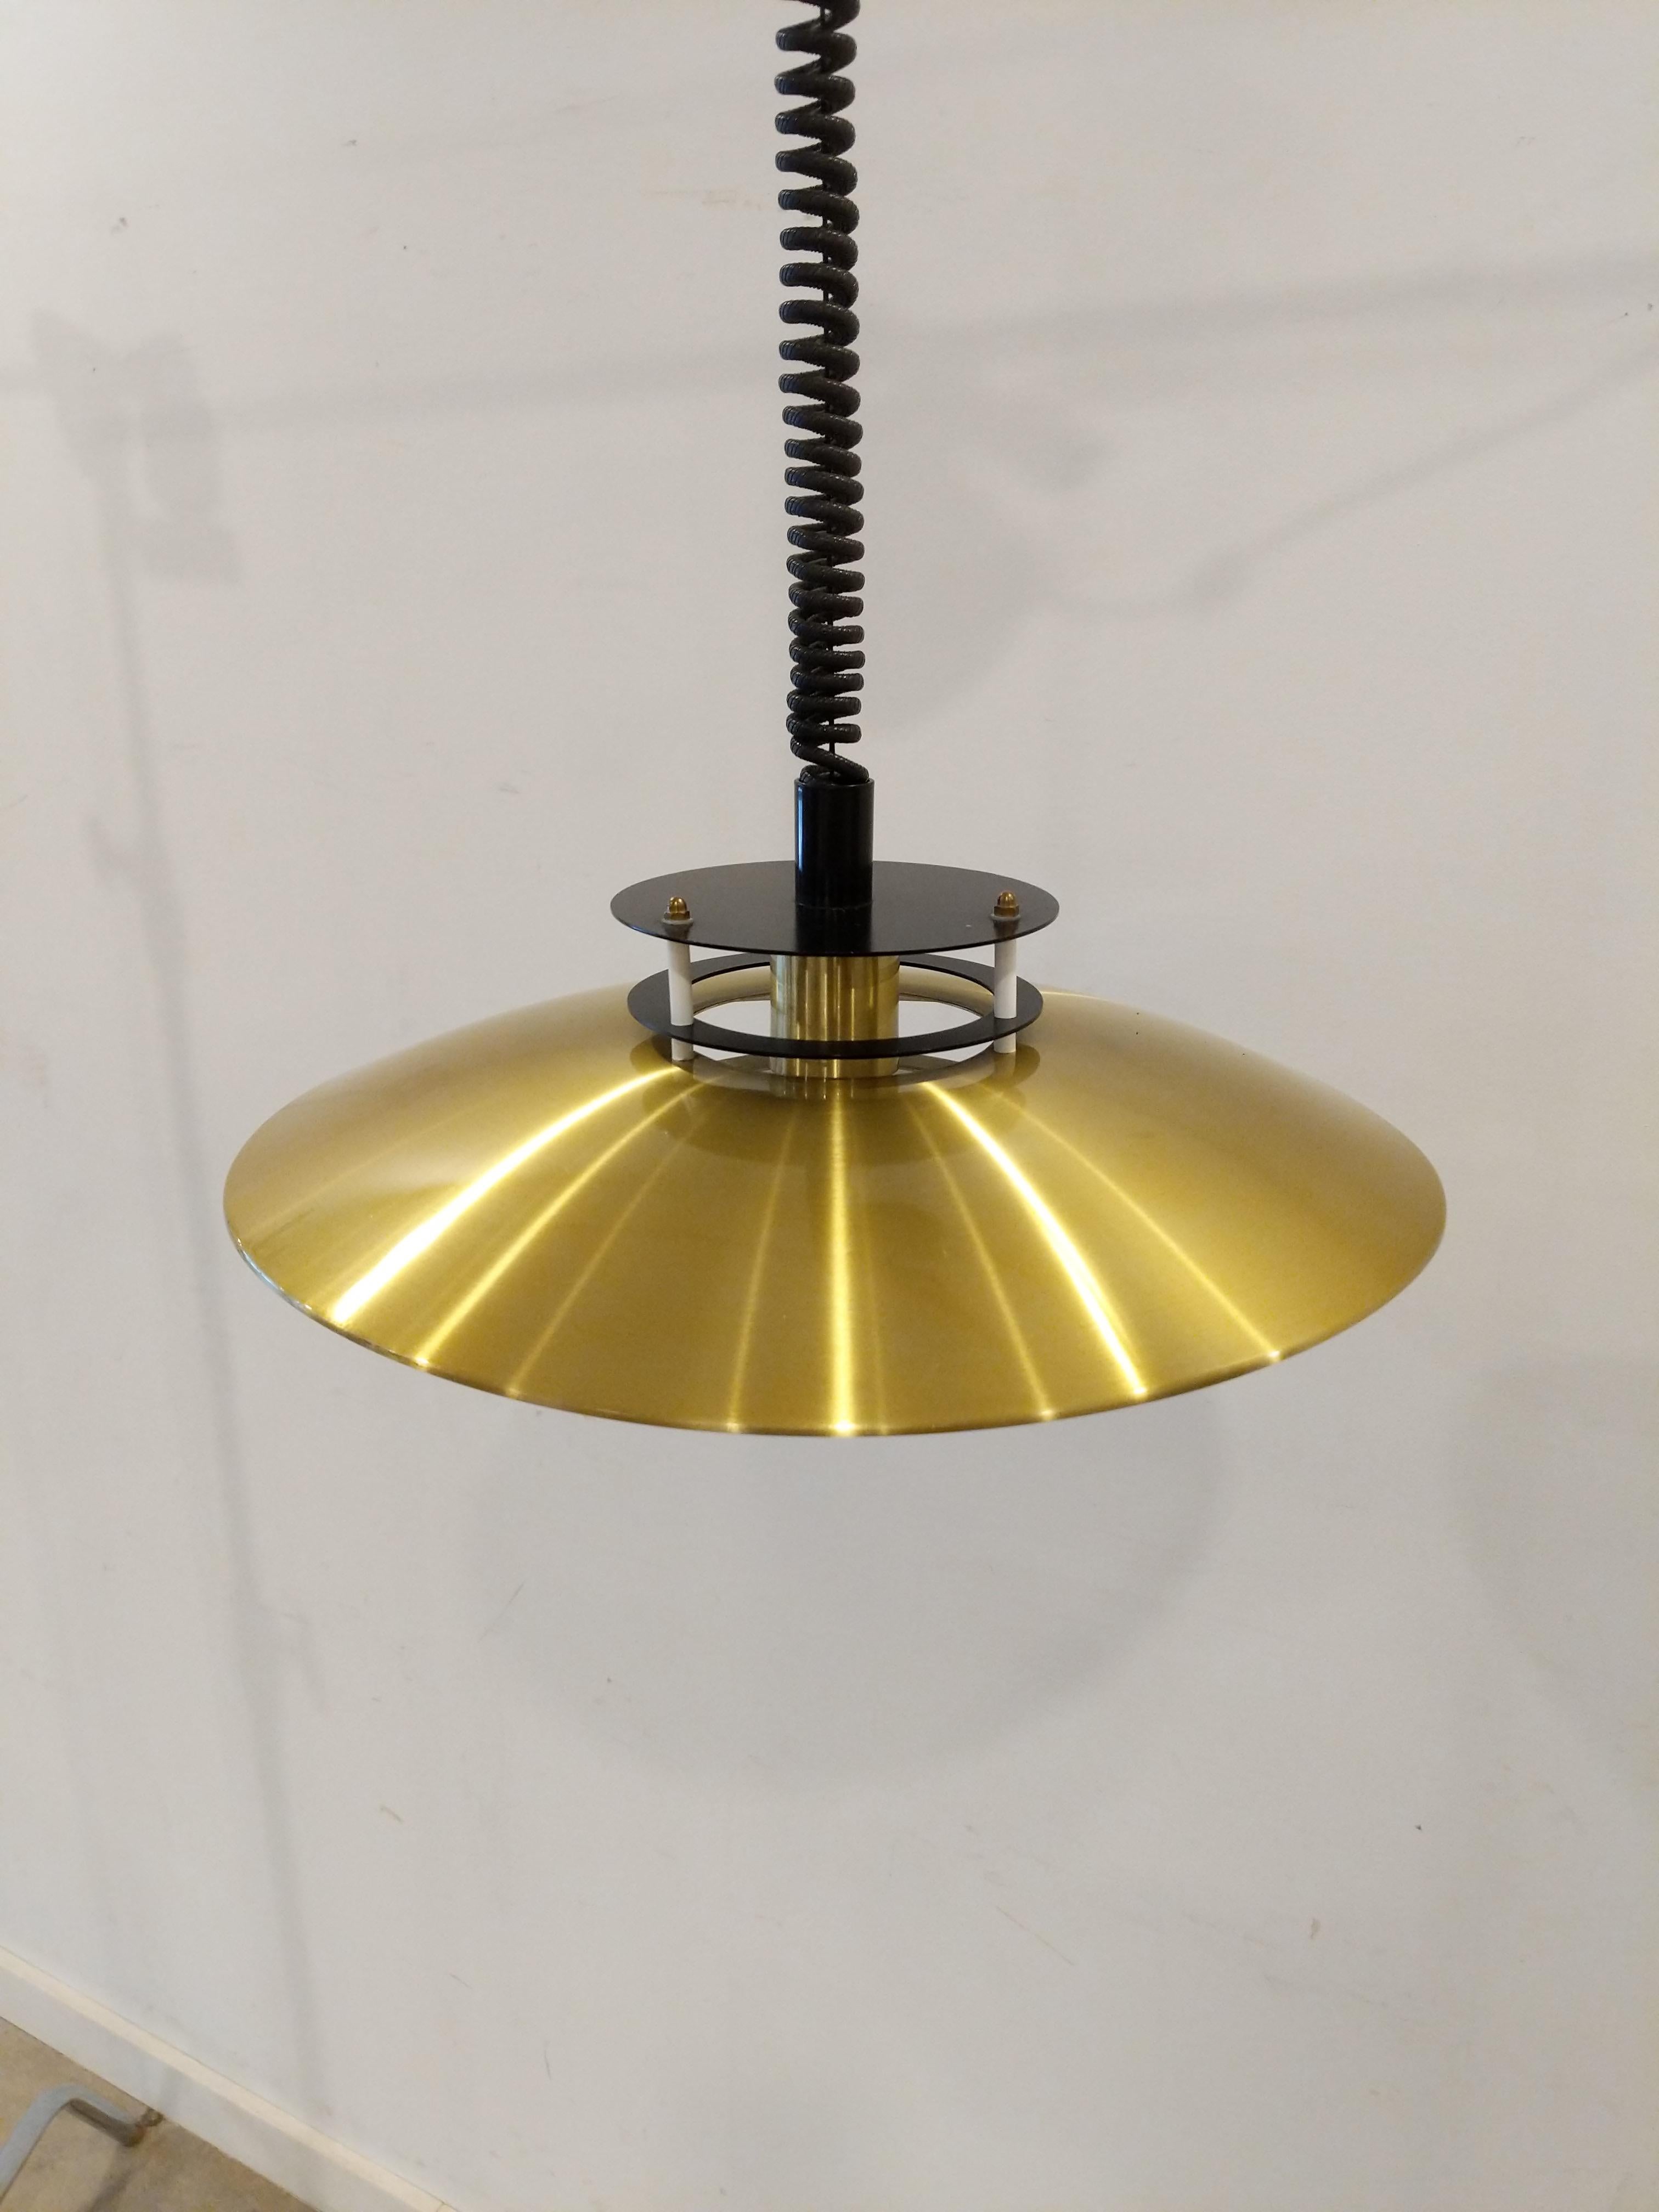 Authentic vintage mid century Danish / Scandinavian Modern hanging lamp / ceiling lamp / pendant light.

With 